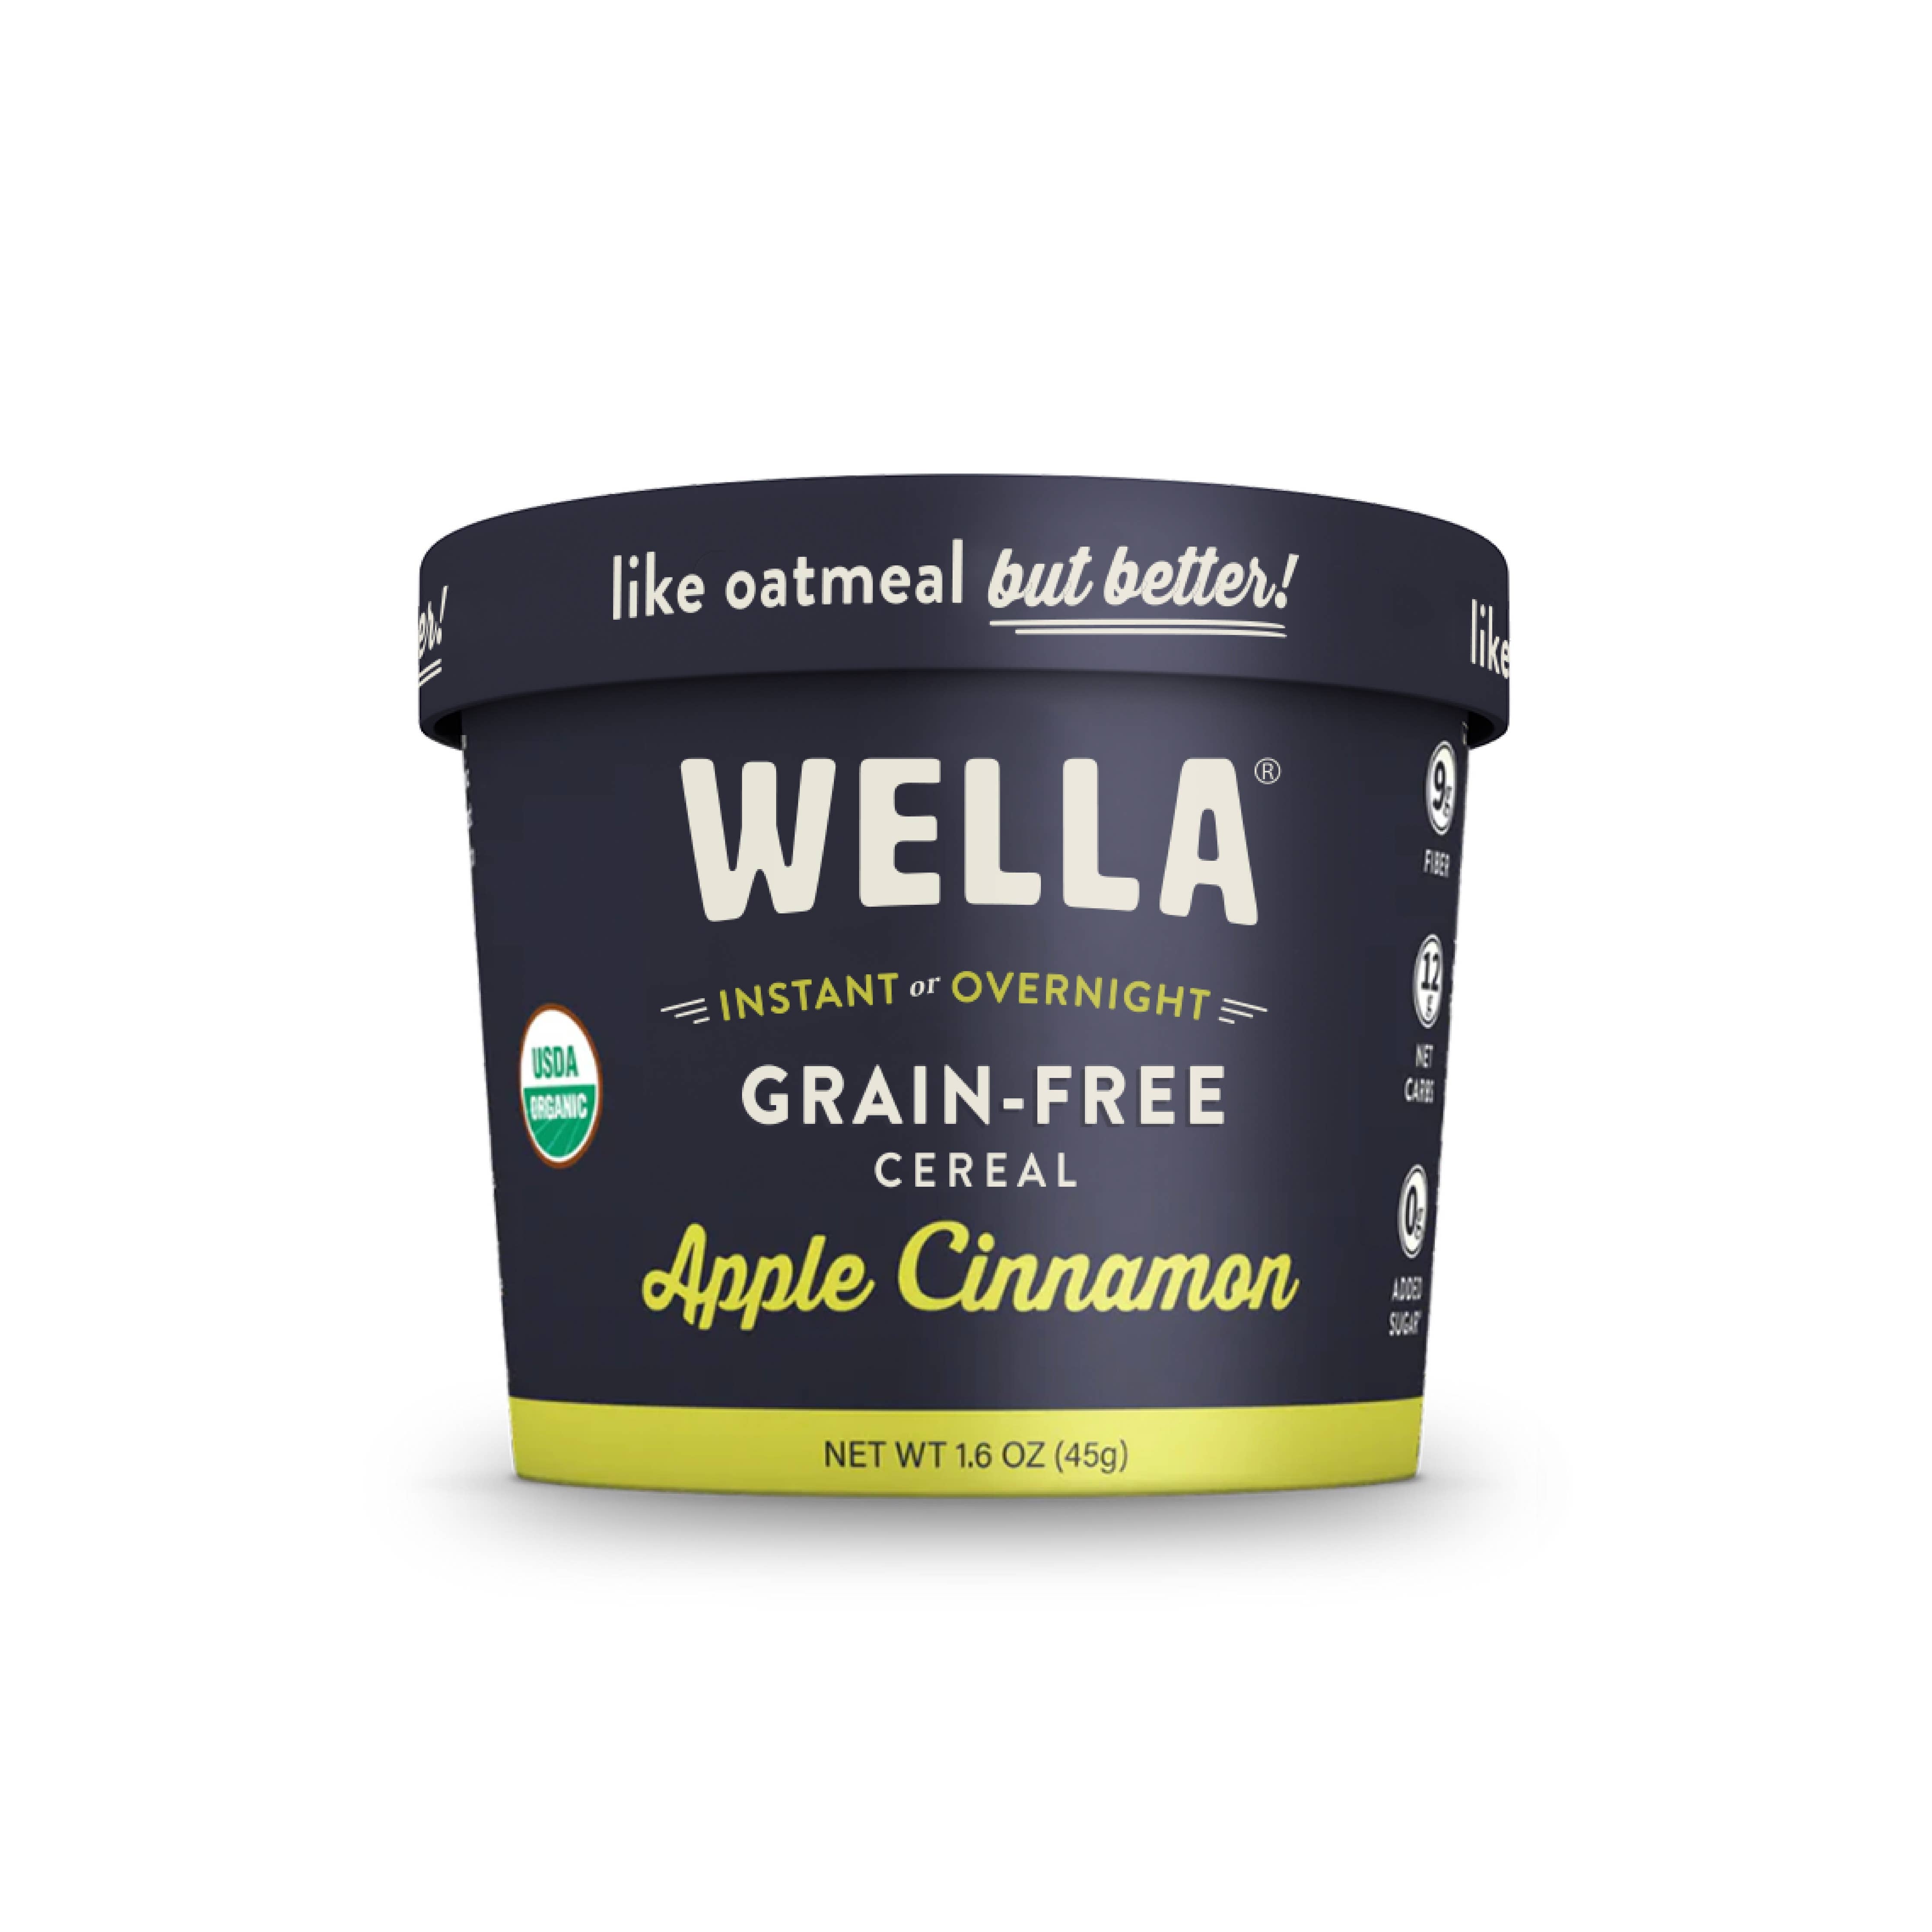 Wella Grain-Free Cereal Apple Cinnamon Cup